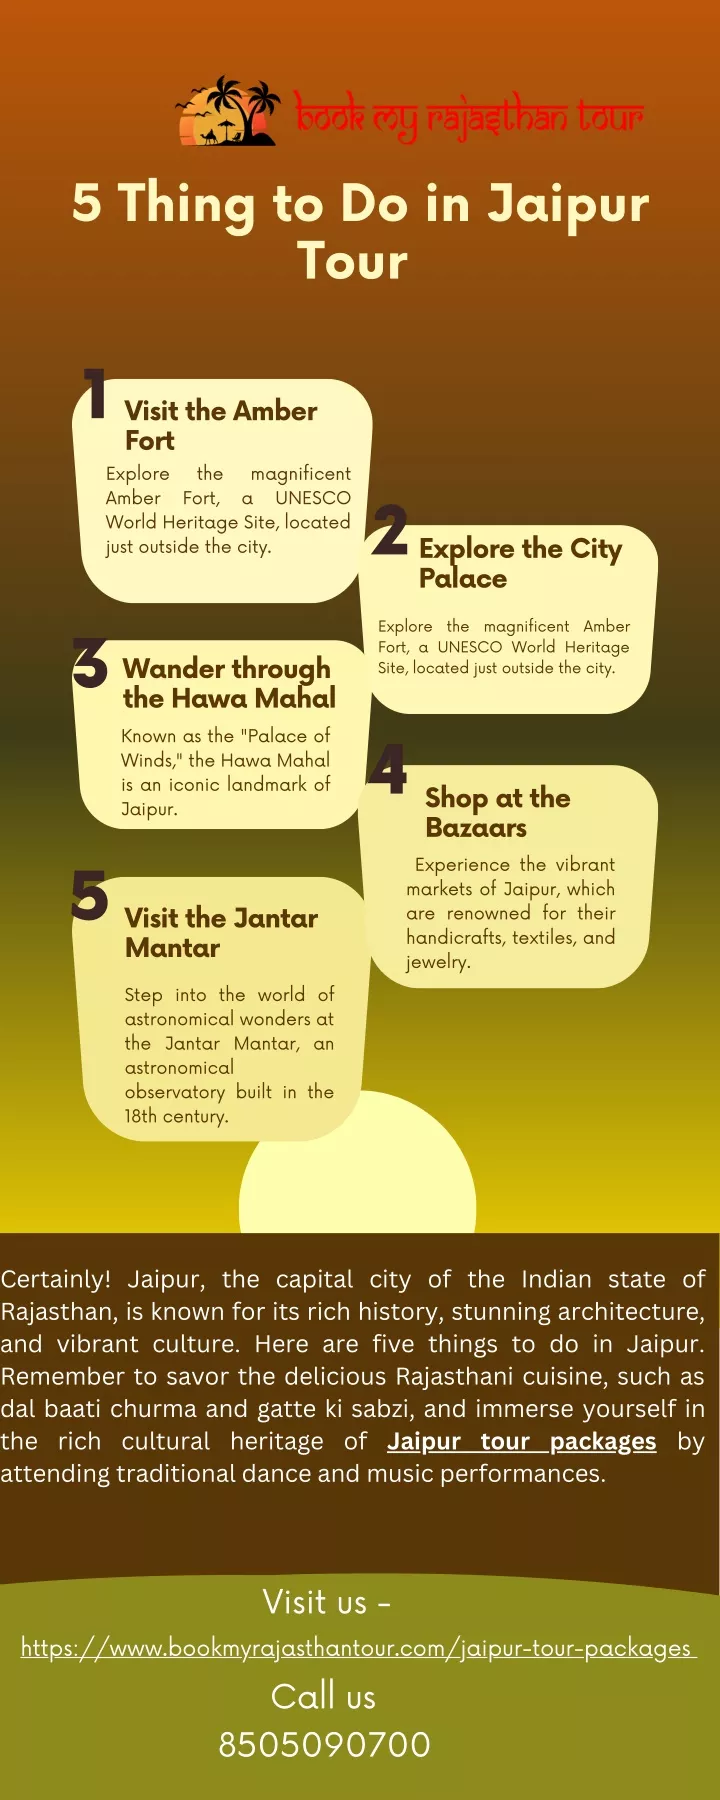 5 thing to do in jaipur tour